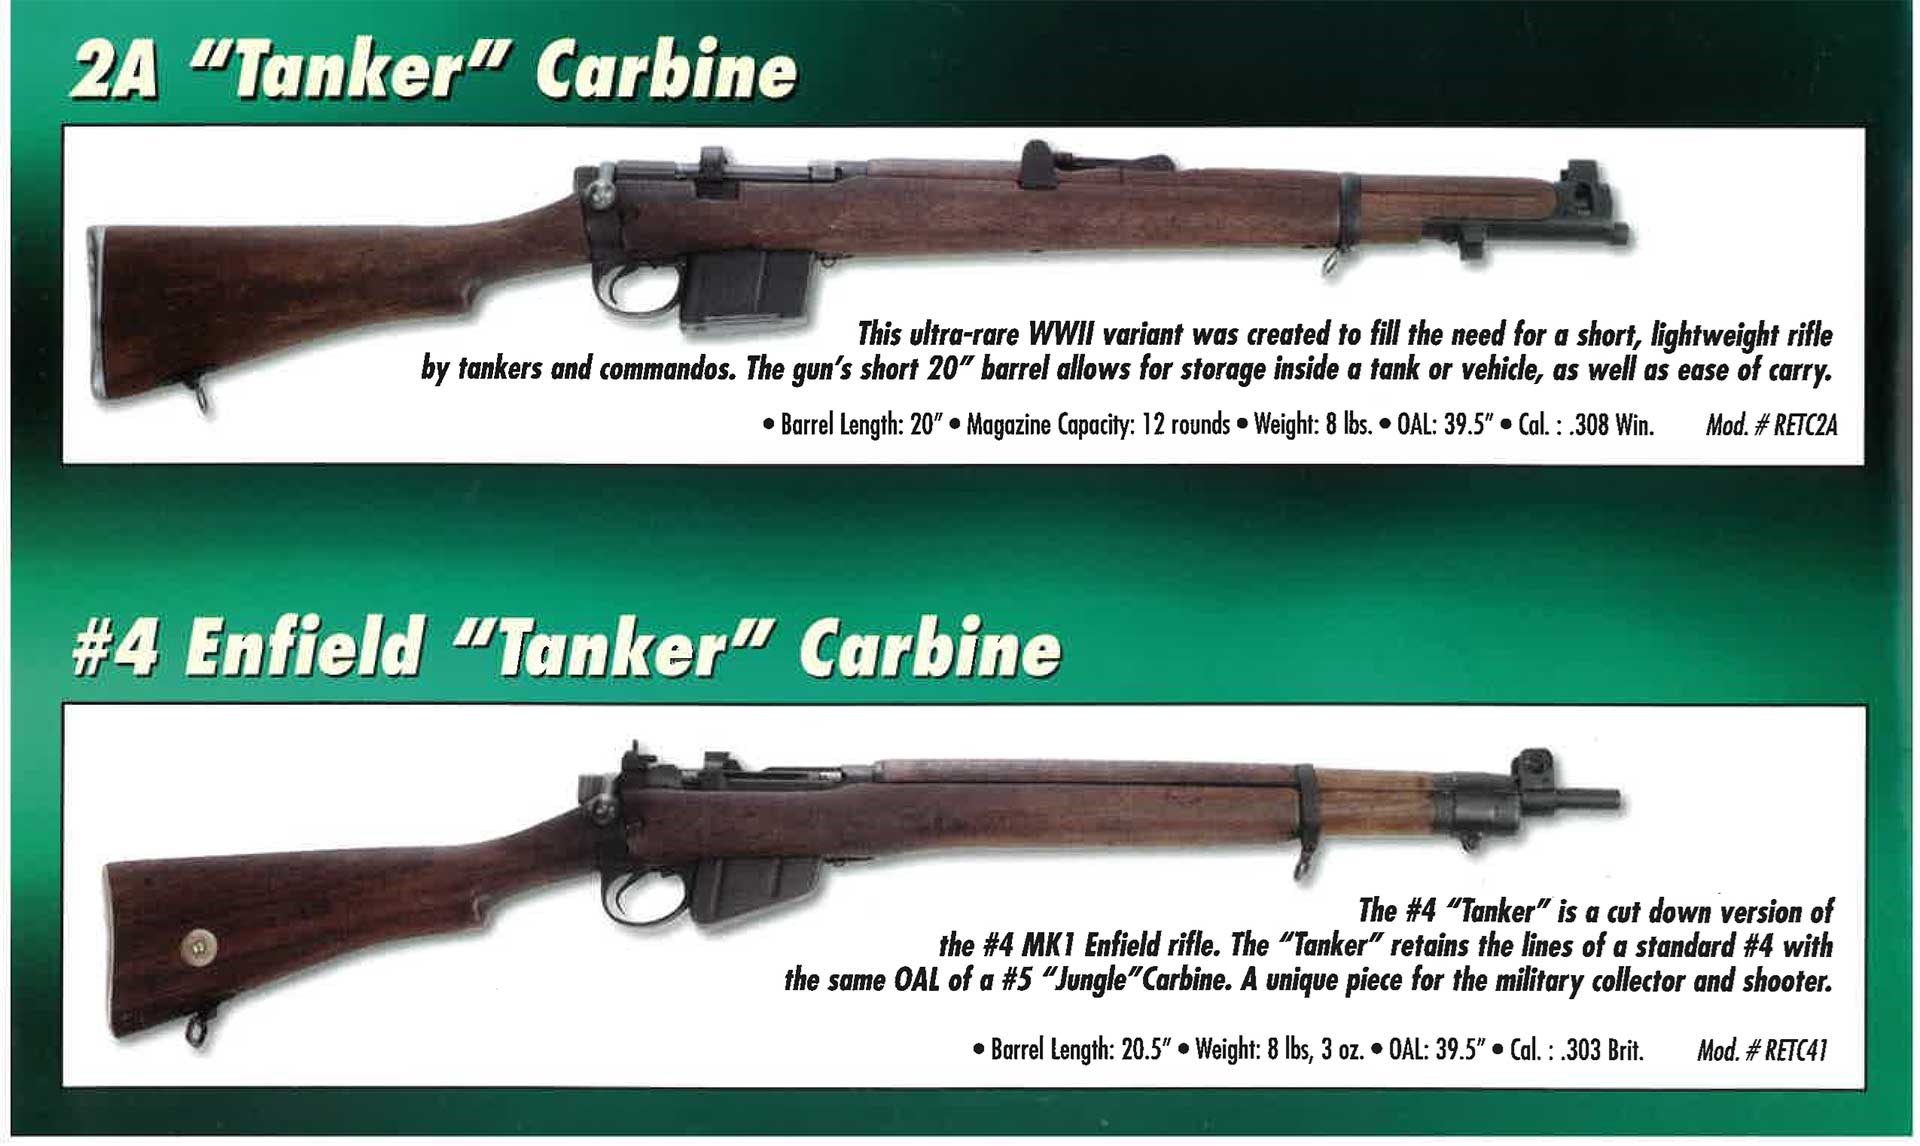 A 2A1 "Tanker" carbine shown next to a No. 4 Enfield "Tanker" carbine.